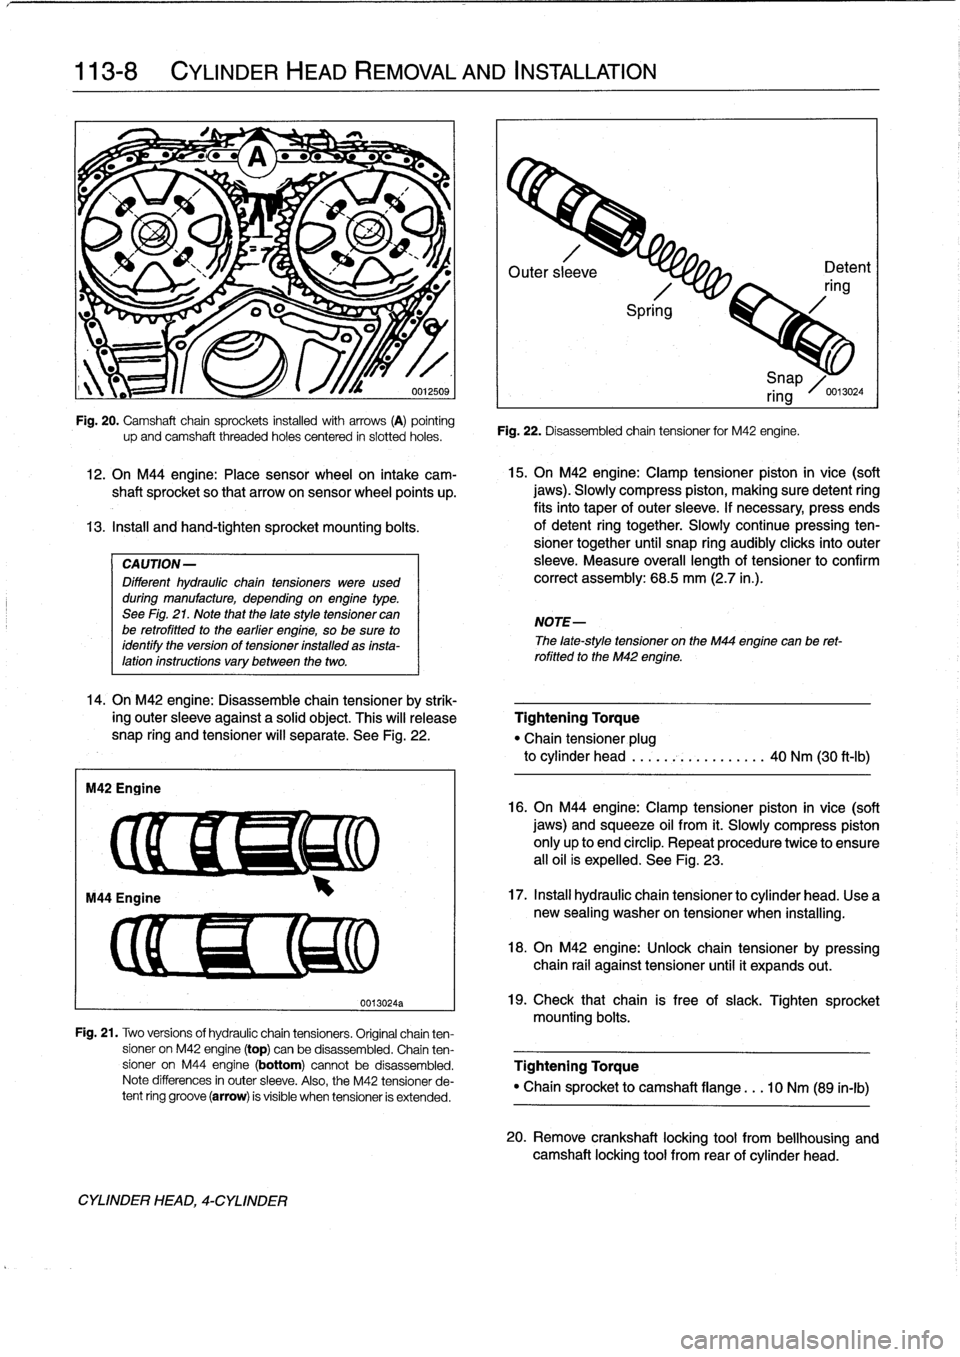 BMW 318i 1998 E36 Workshop Manual 
113-8

	

CYLINDER
HEAD
REMOVAL
AND
INSTALLATION

IW?
-
L
/~f
W

	

~
4r

"

-
"

	

;,s
1

12
.
On
M44
engine
:
Place
sensor
wheel
on
intake
cam-
shaft
sprocket
so
that
arrowon
sensor
wheel
points
